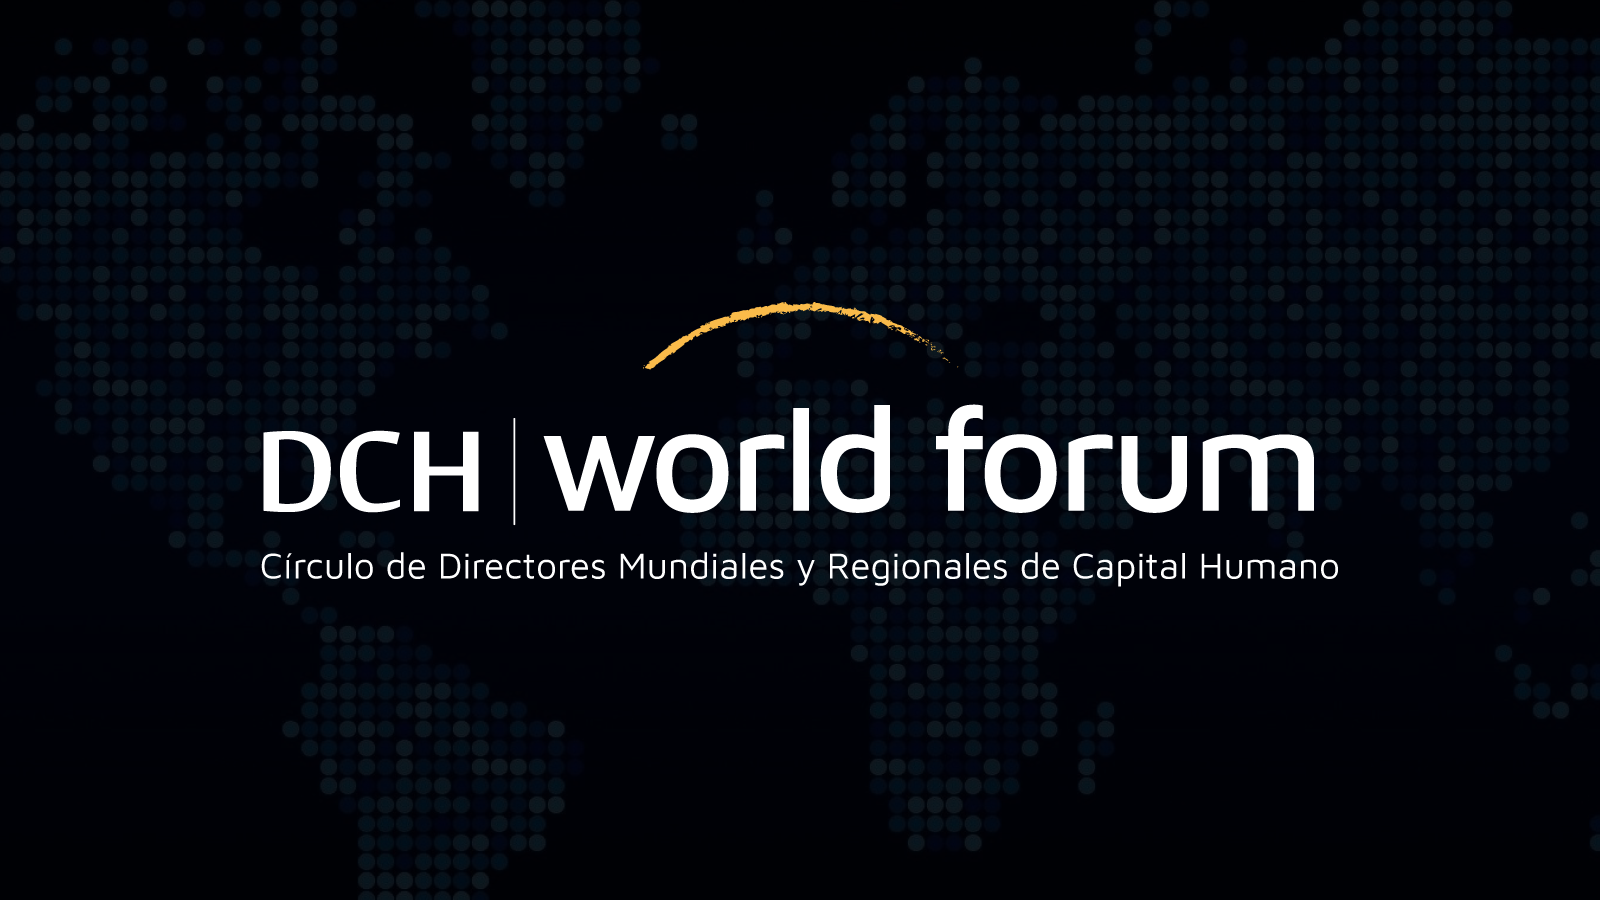 world-forum-dch